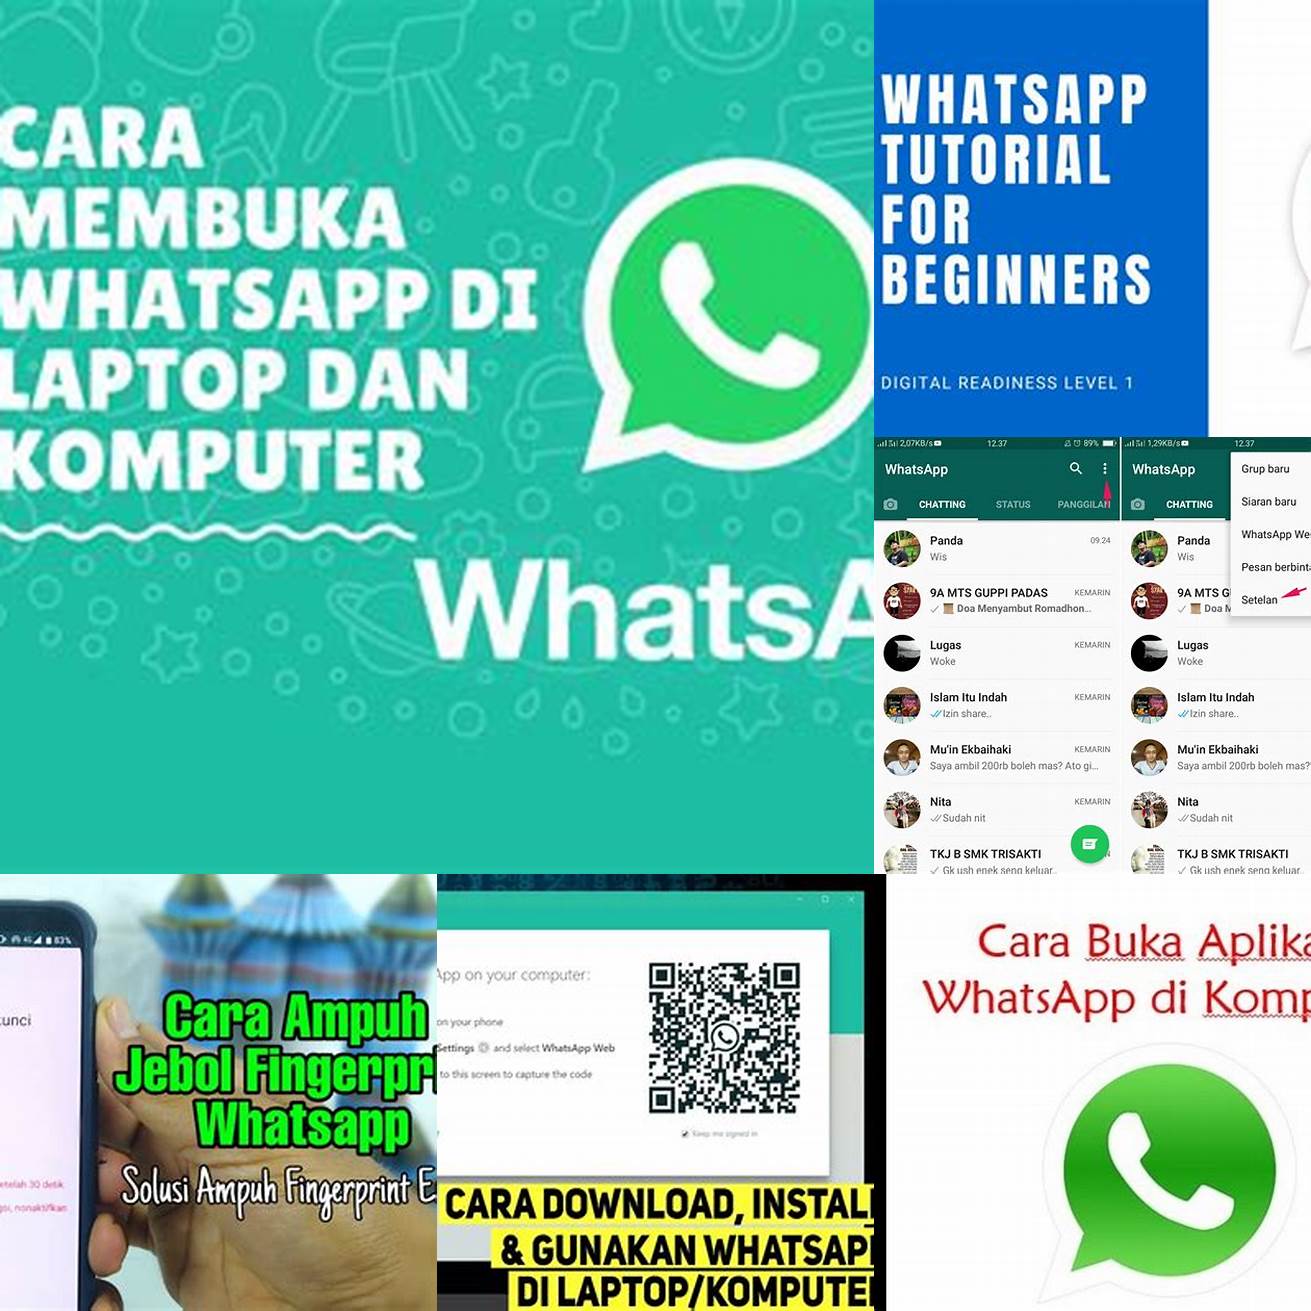 1 Buka aplikasi WhatsApp